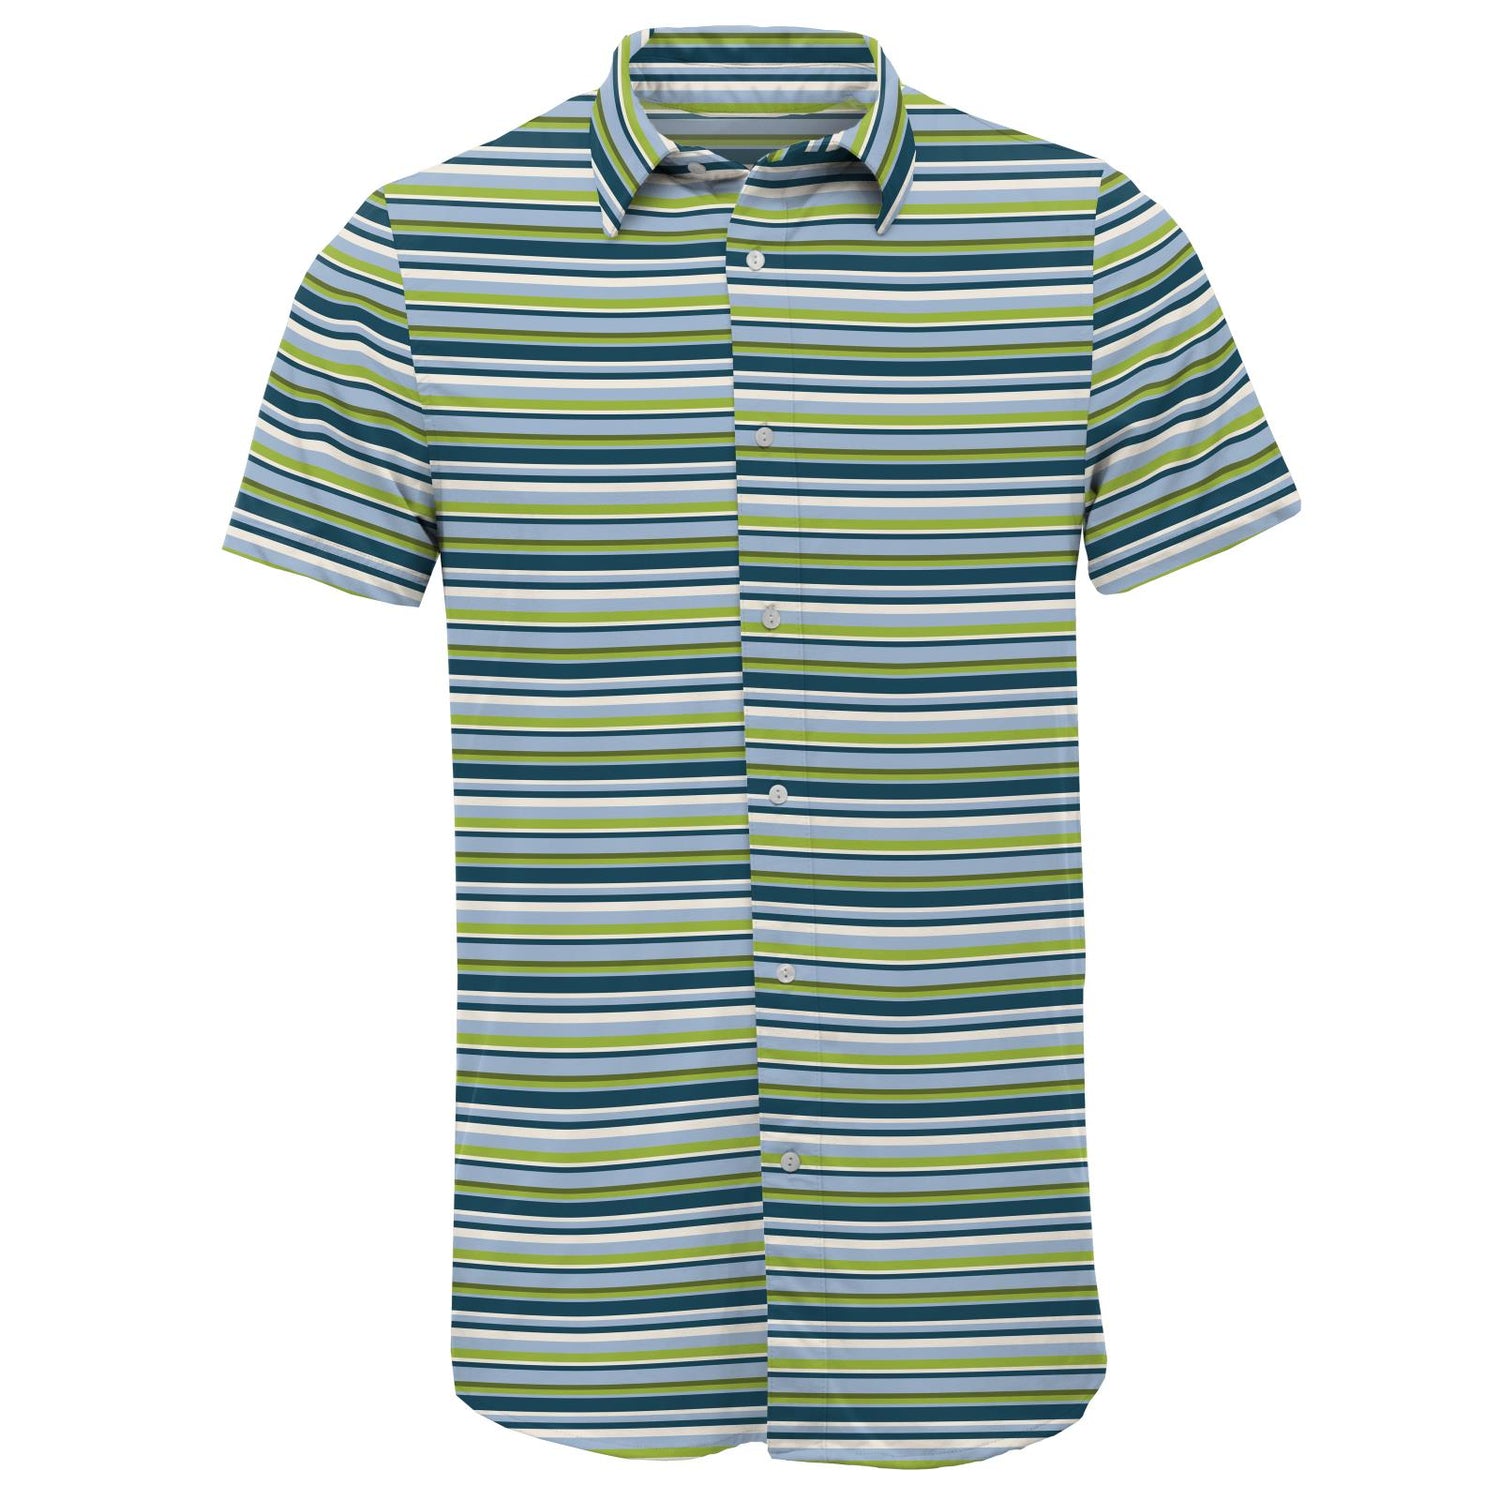 Men's Print Short Sleeve Luxe Jersey Button Down Shirt in Anniversary Sailaway Stripe